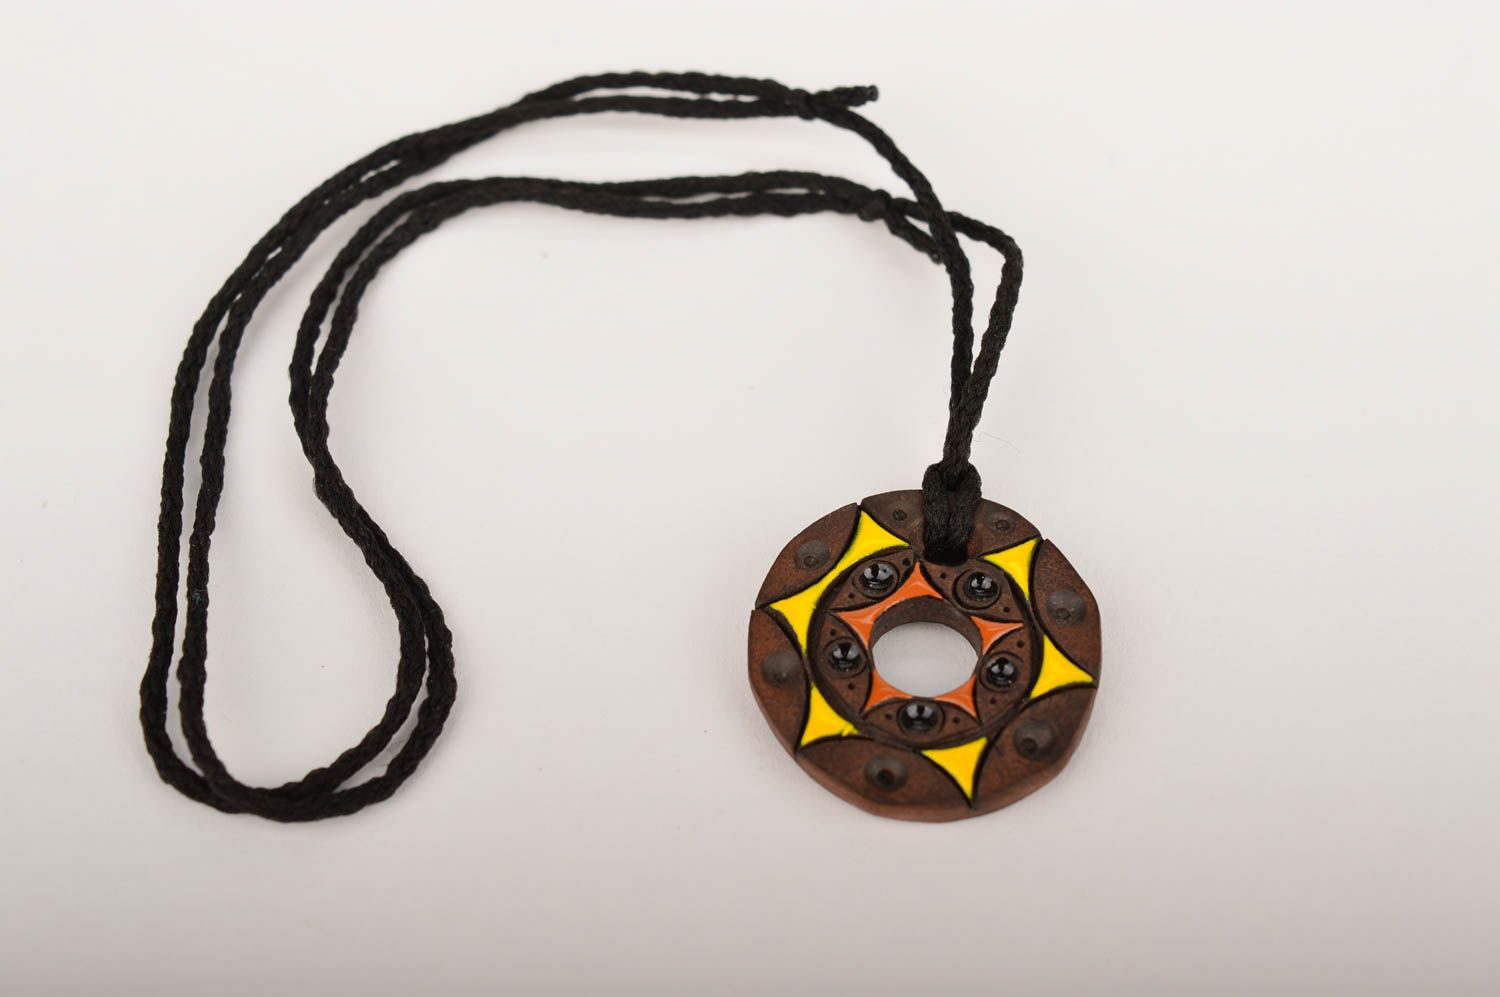 Handmade pendant designer accessory clay pendant for women unusual gift ideas photo 4